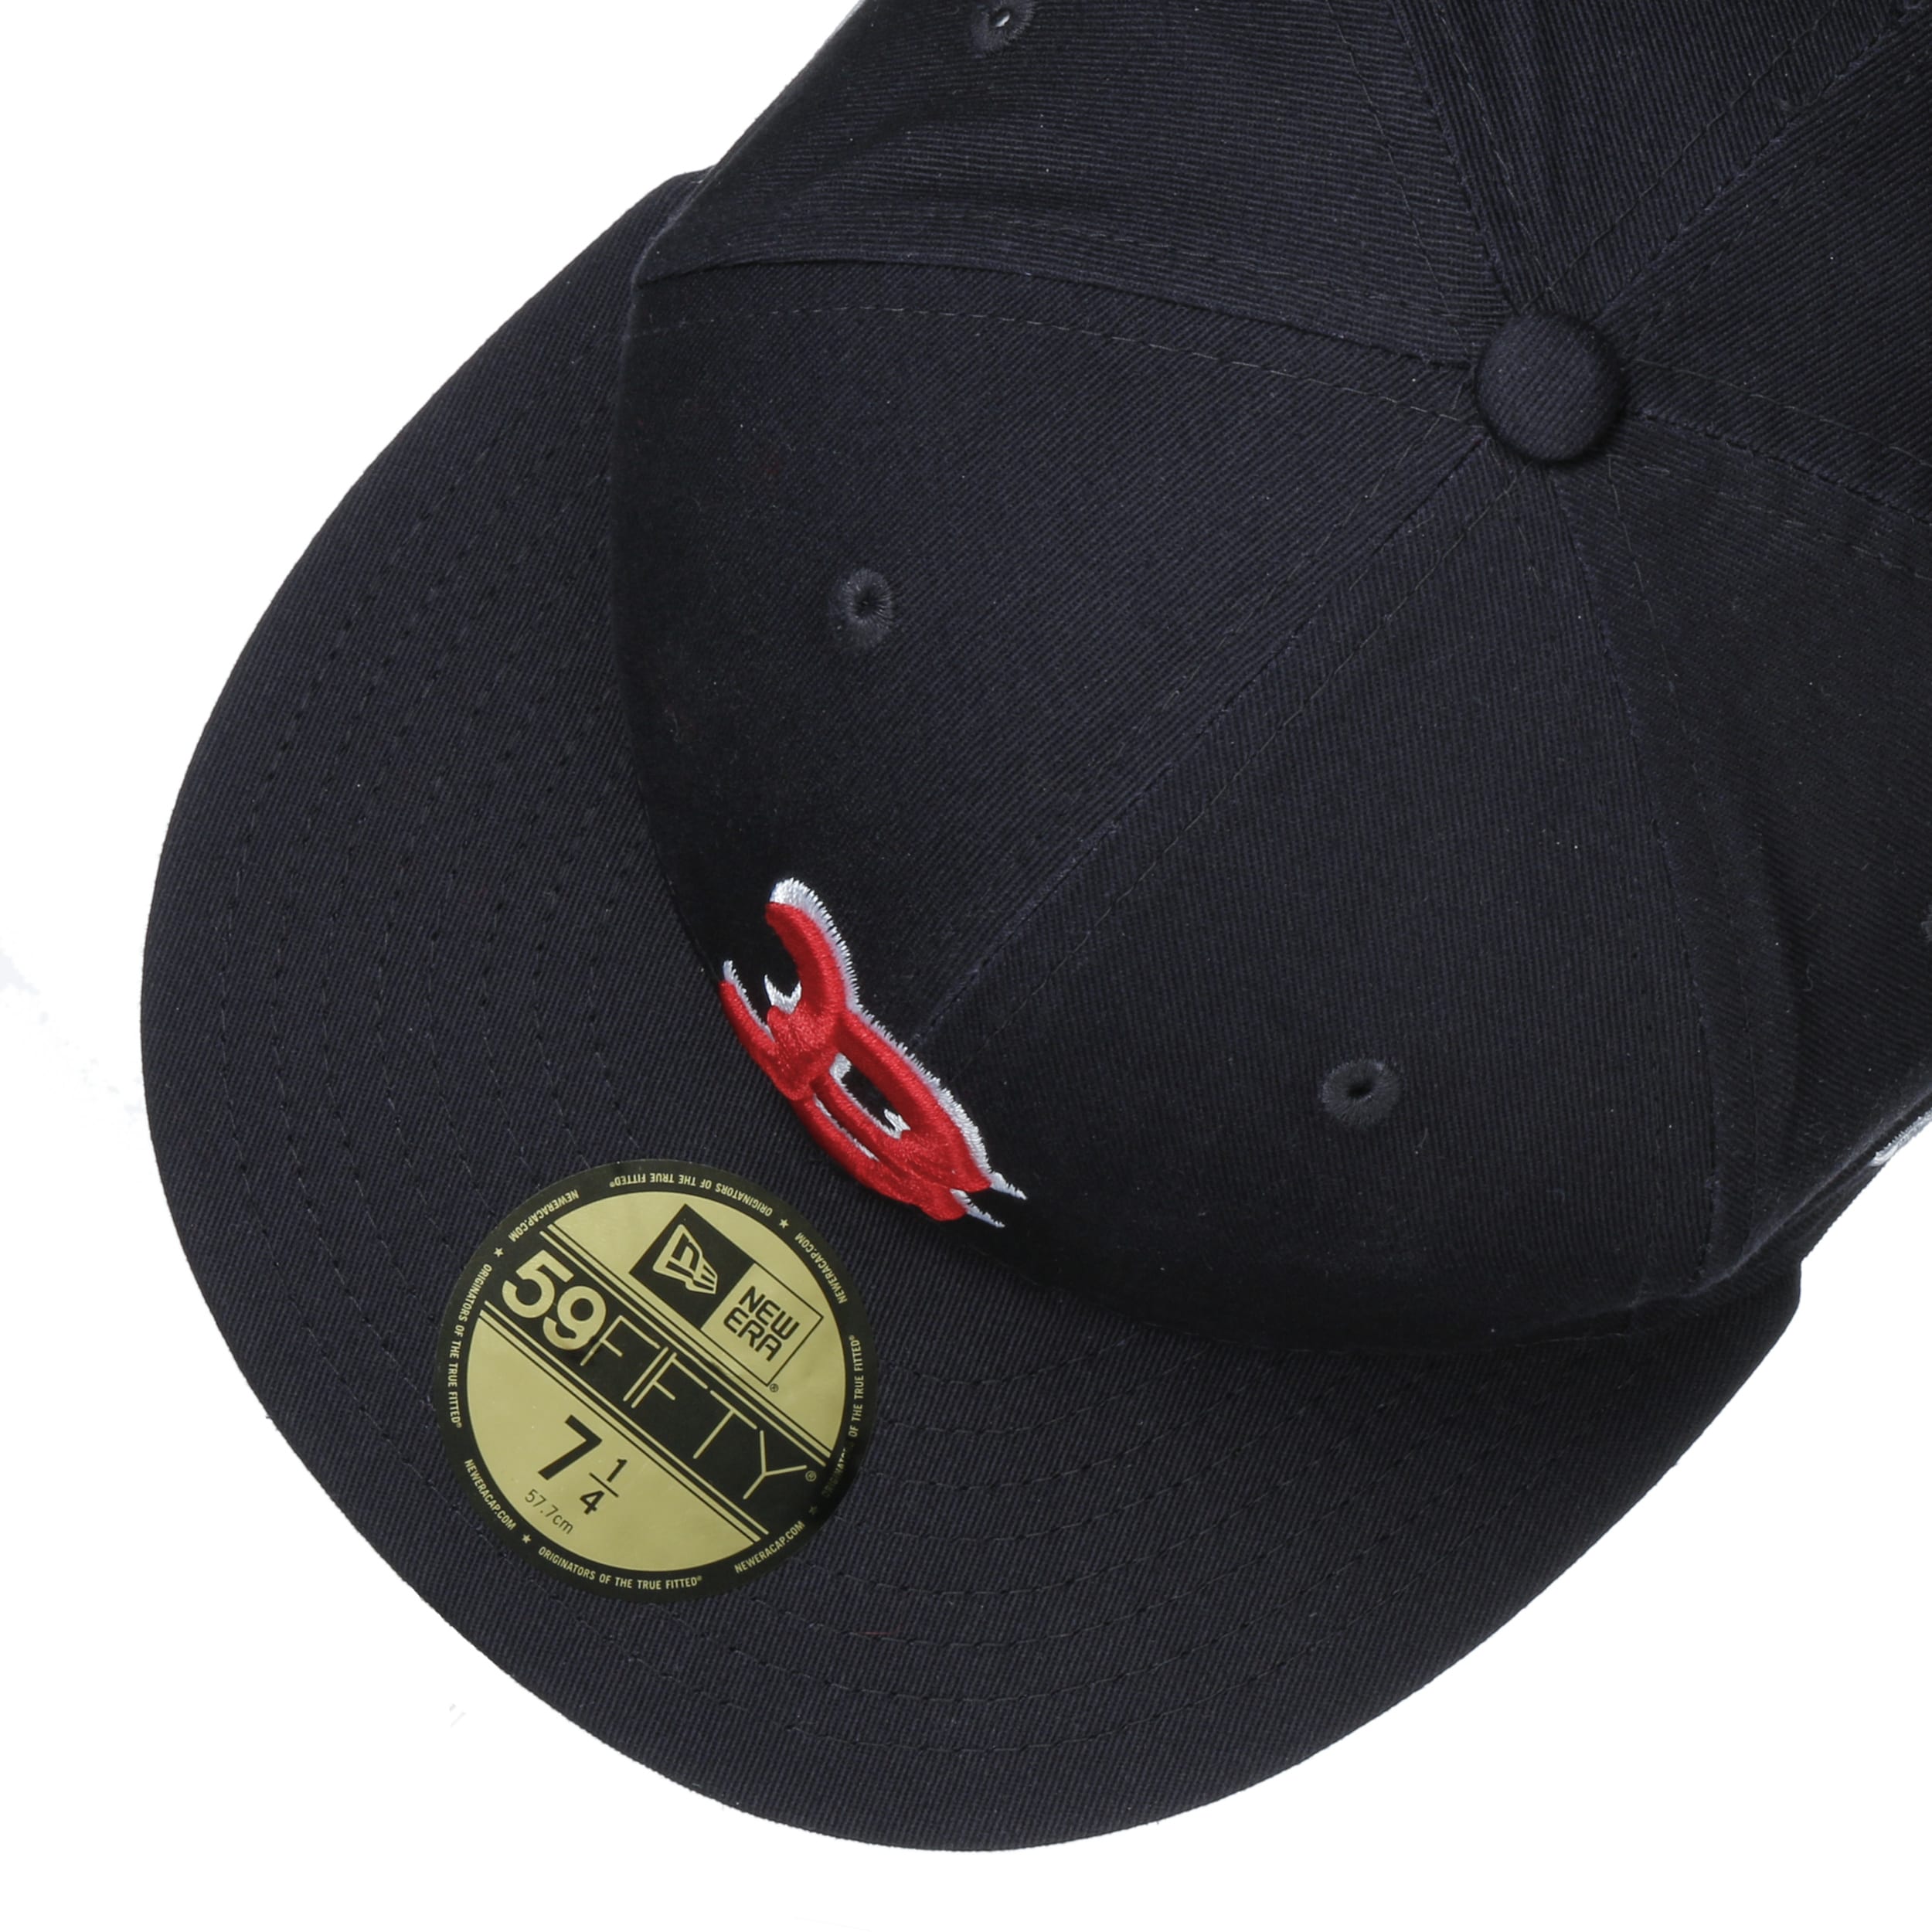 Buy New Era Boston Red Sox Hat Official MLB Flat Brim Cap 59Fifty